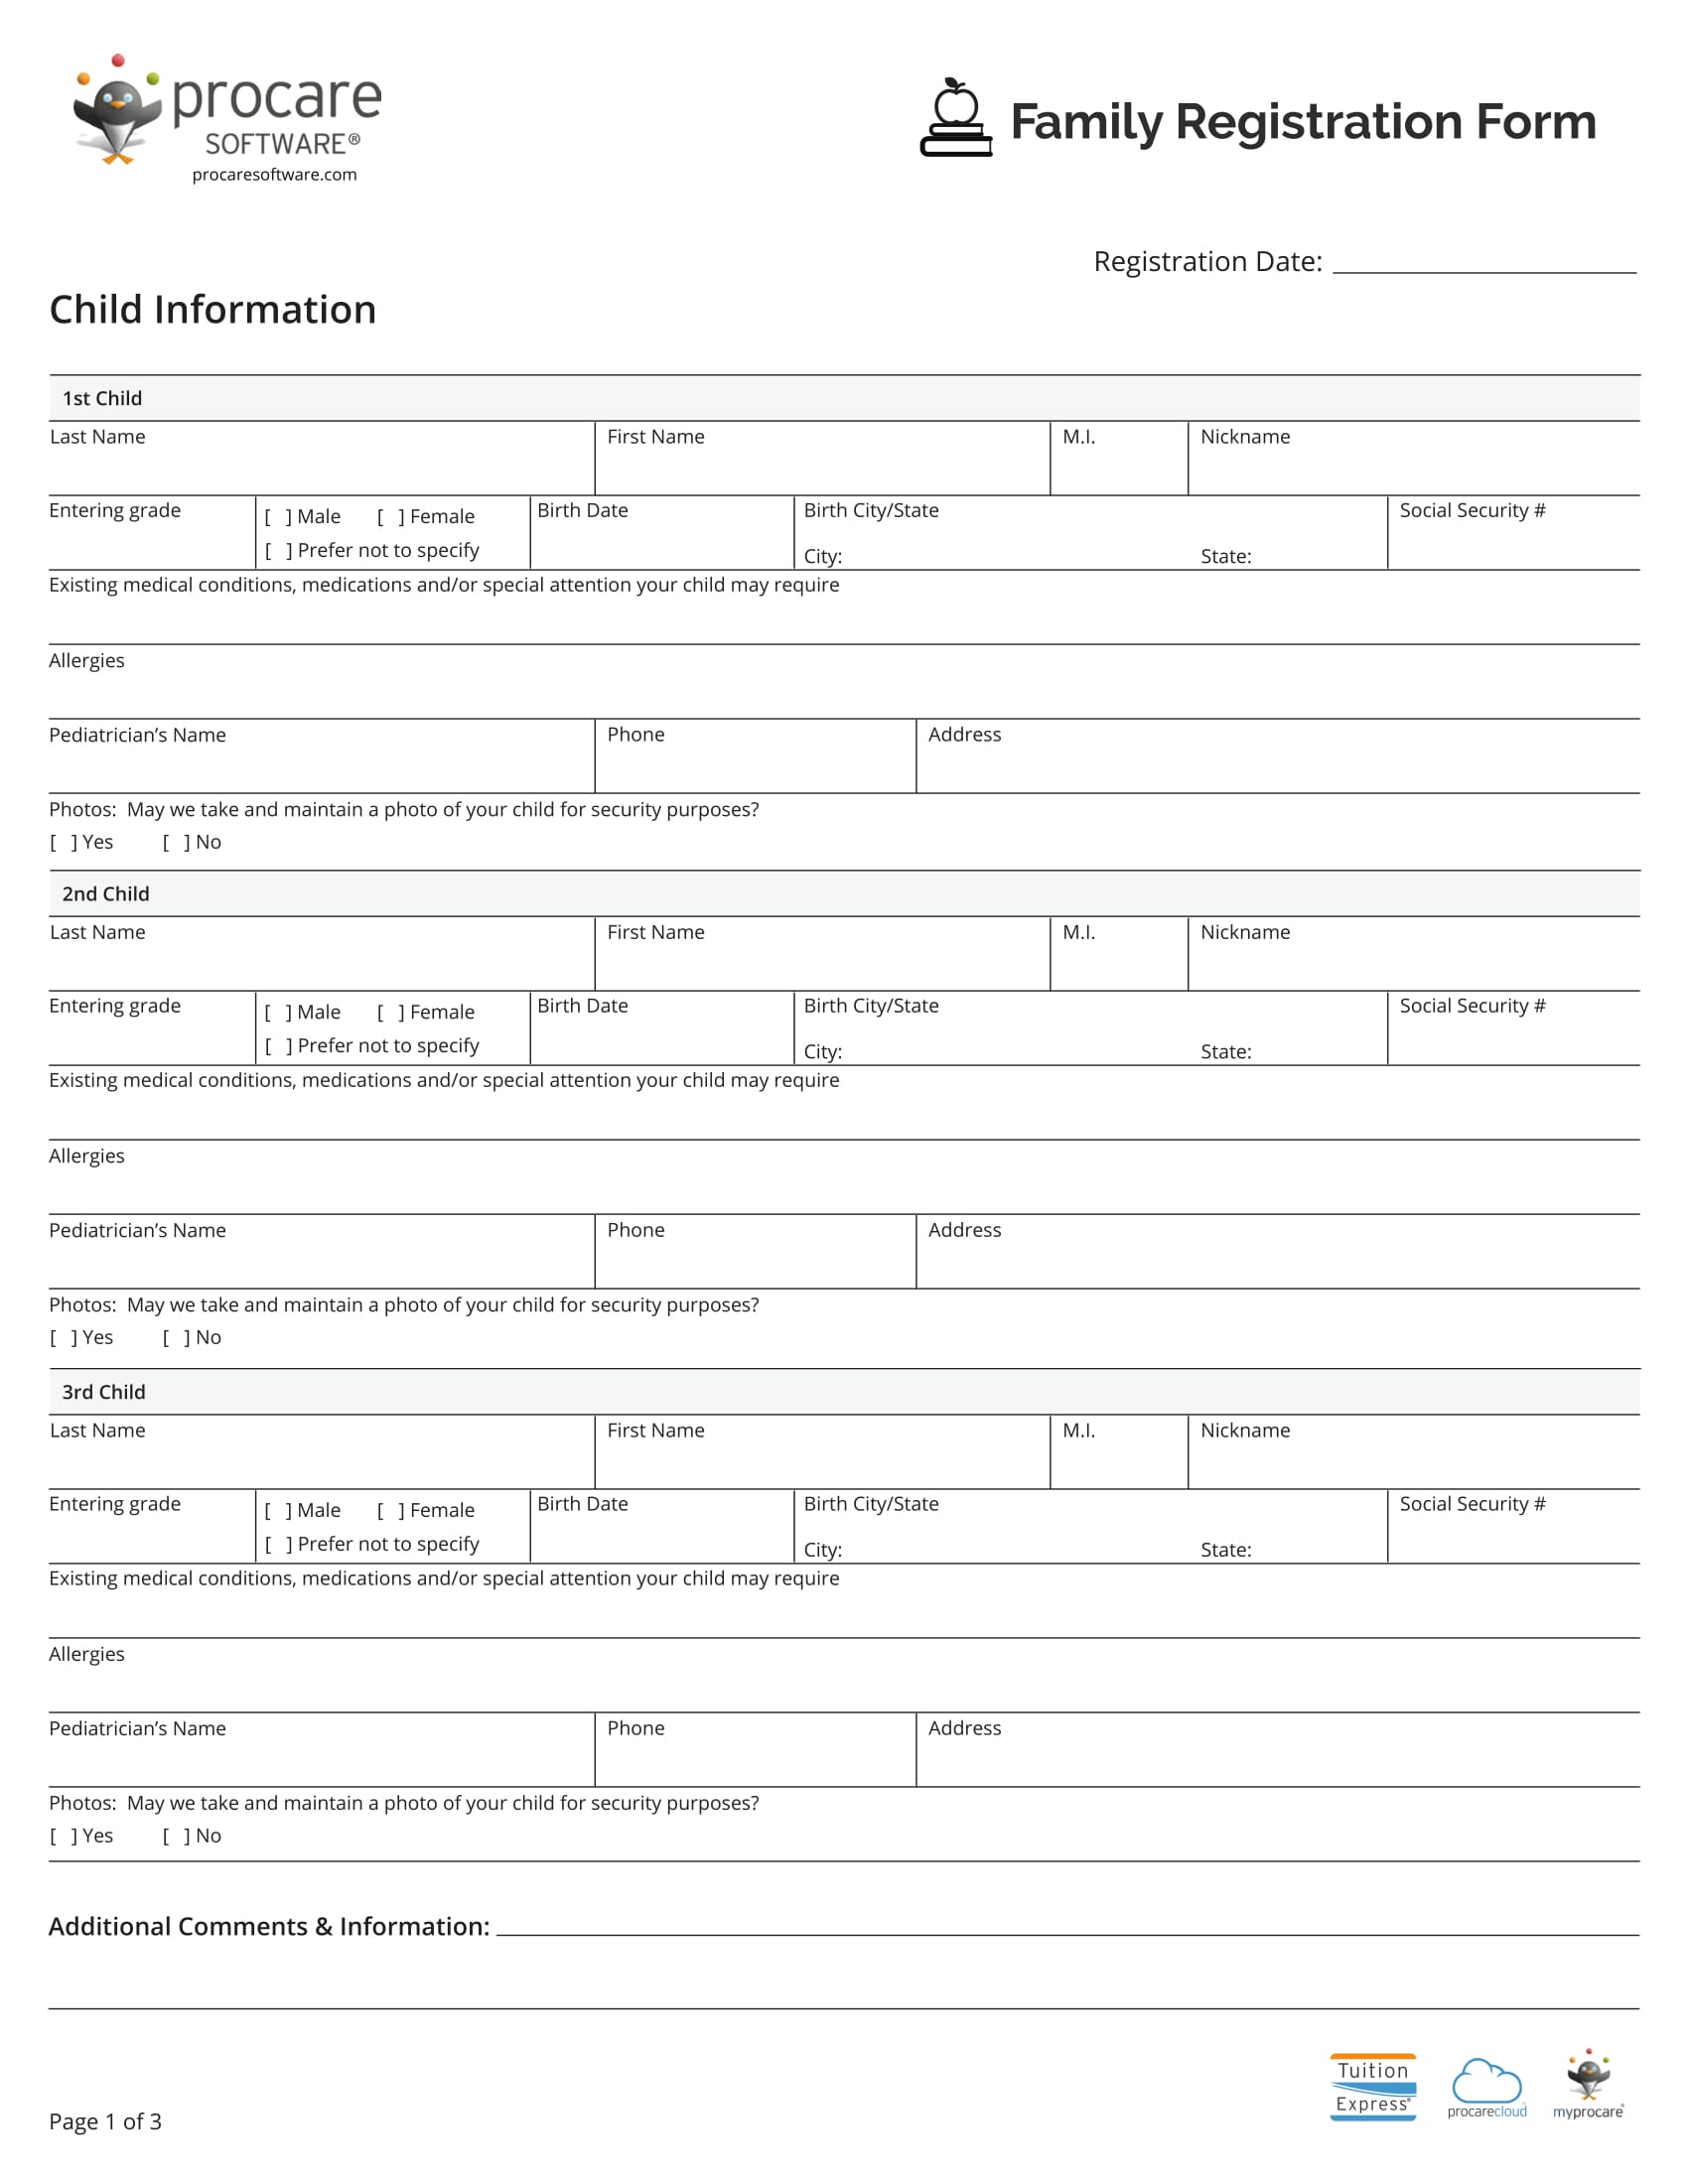 daycare family registration information form 1